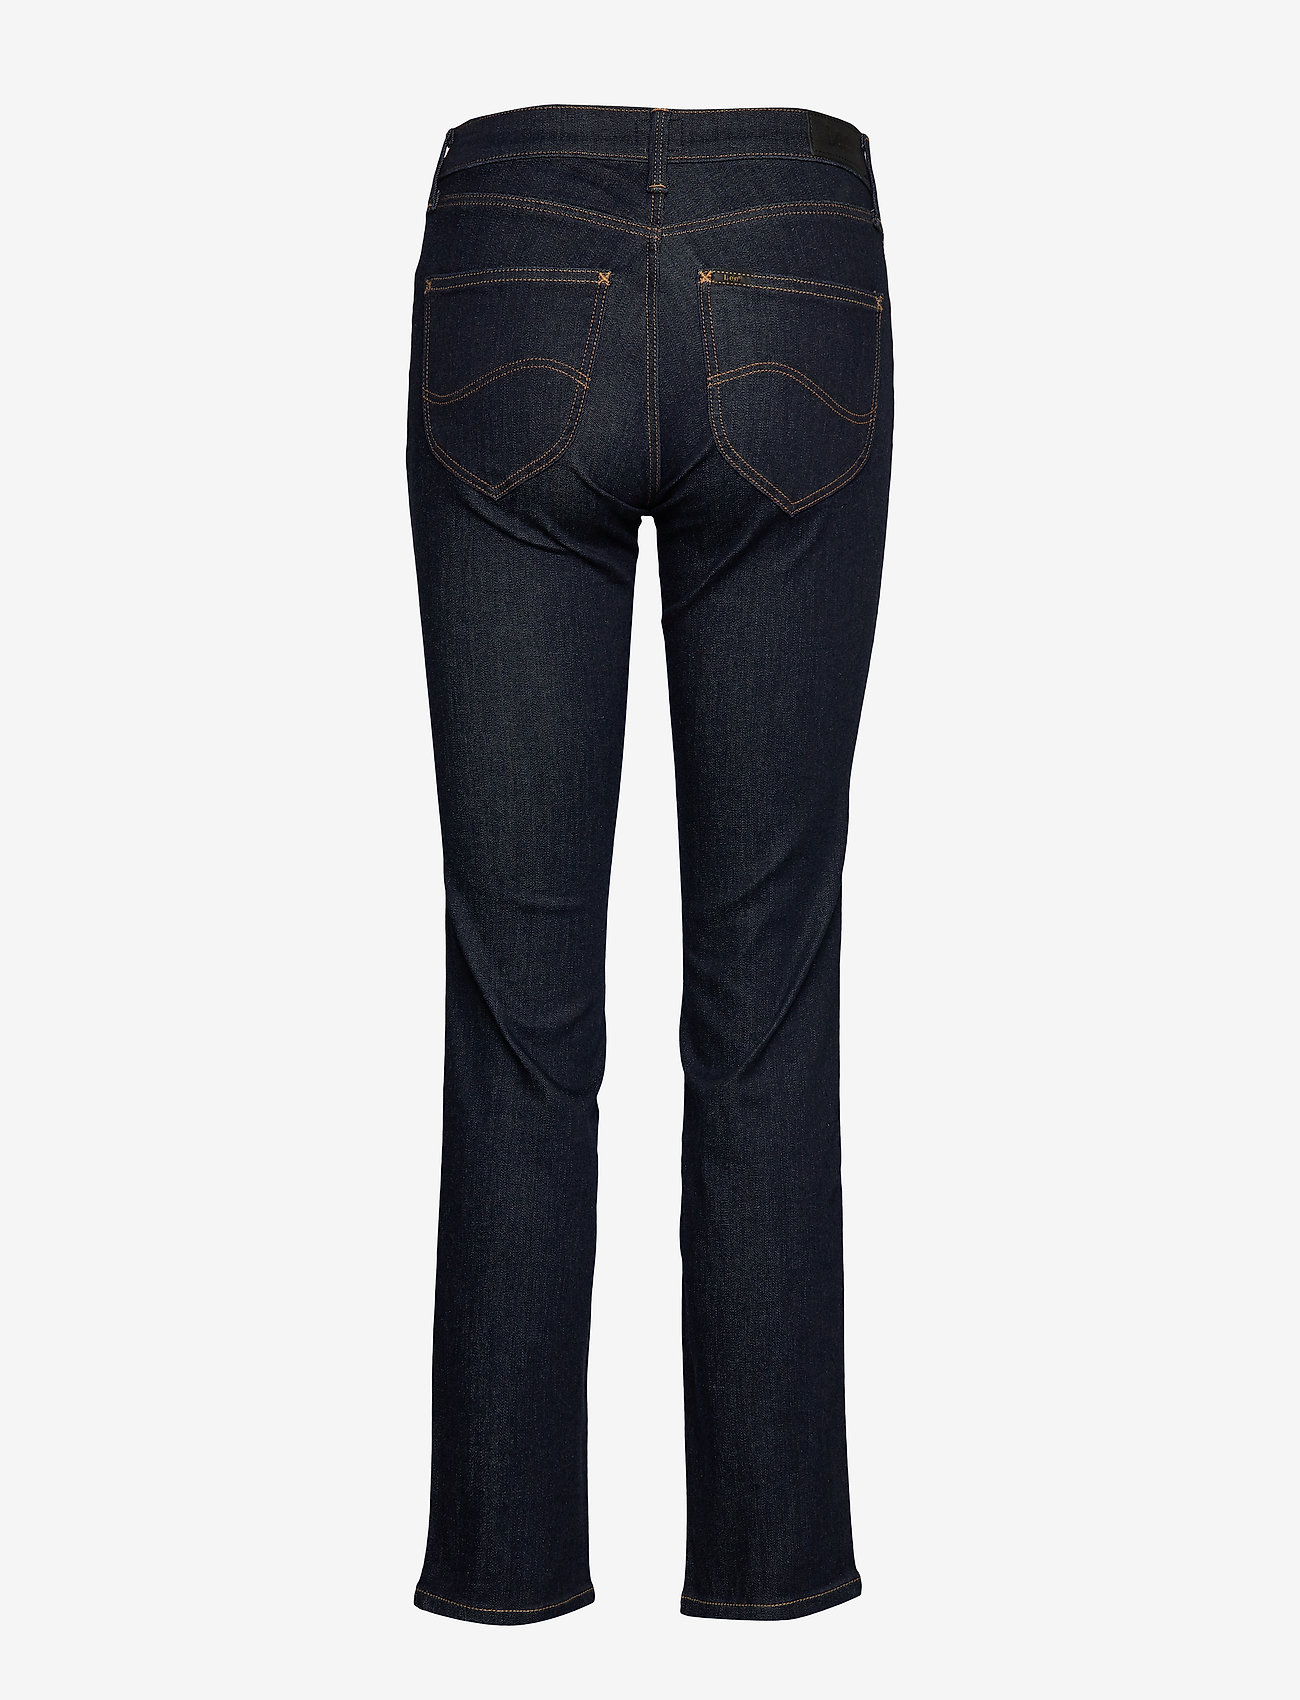 Lee Jeans - MARION STRAIGHT - raka jeans - rinse - 1